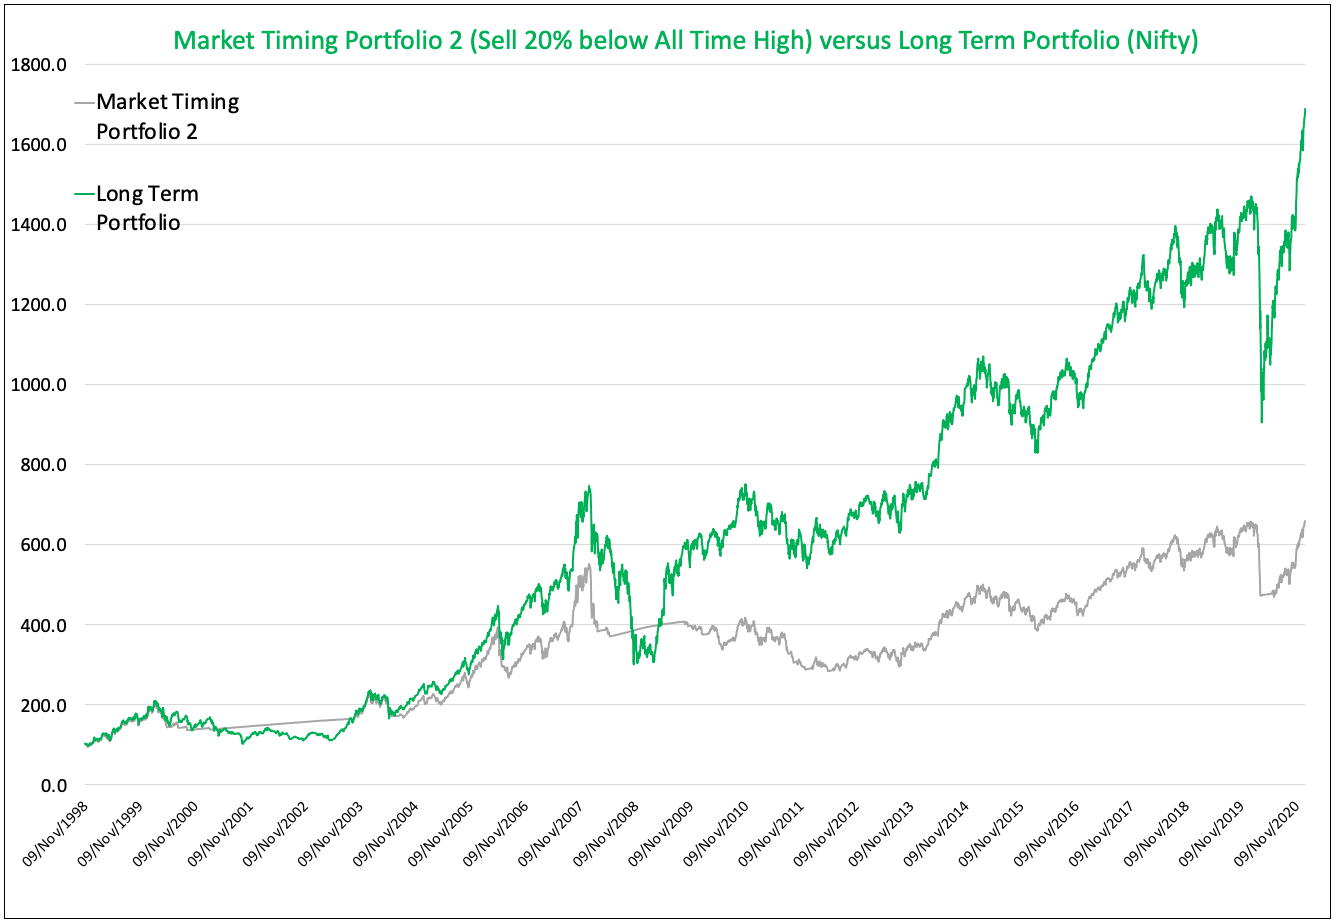 market timing portfolio 2 (sell 20% below All Time High) vs. long term portfolio nifty